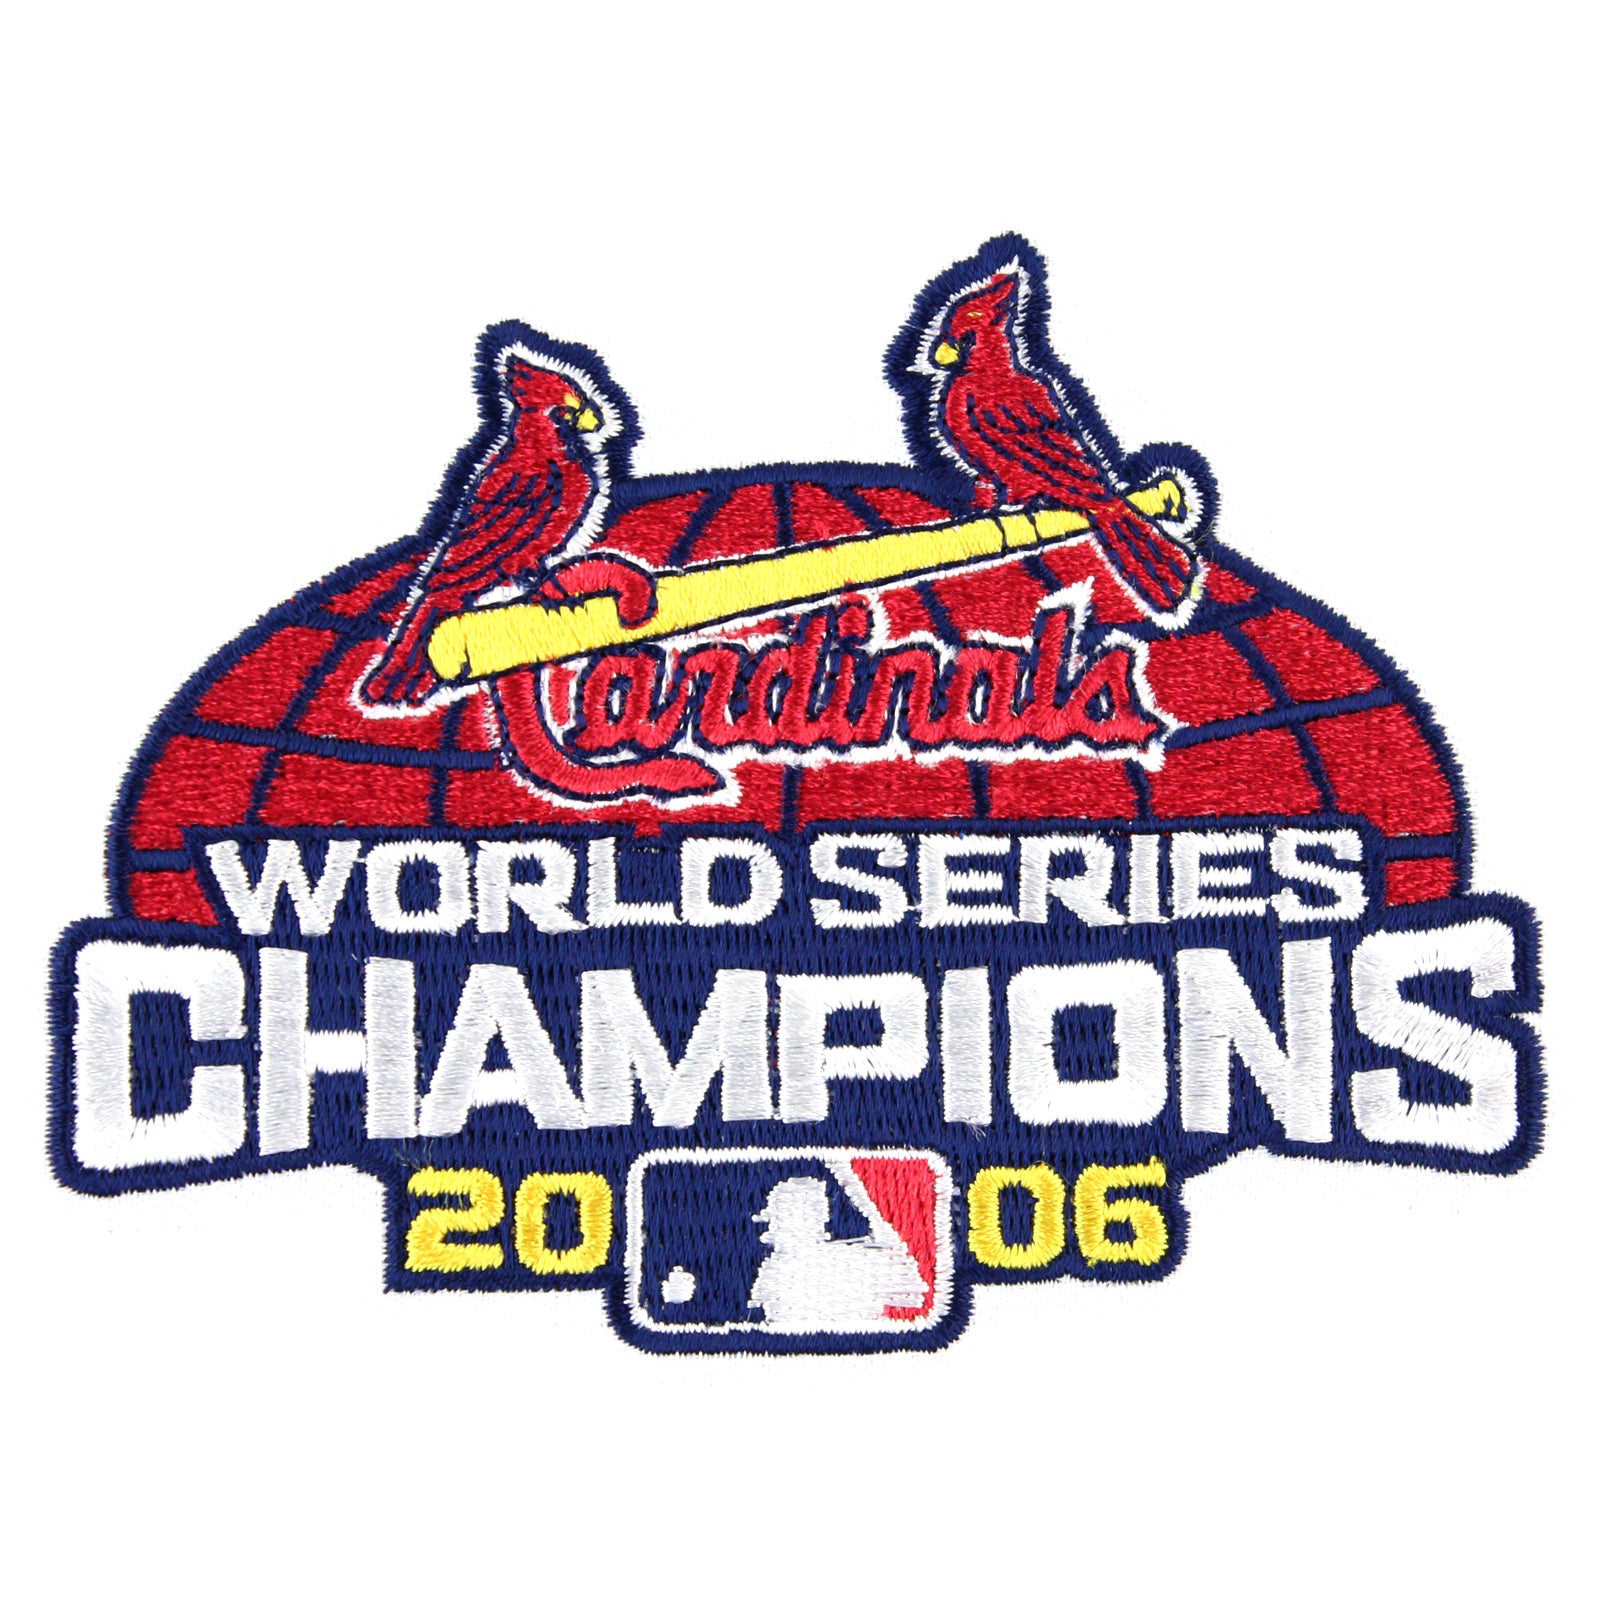 St. Louis Cardinals MLB 2007 pocket schedule with 2006 World